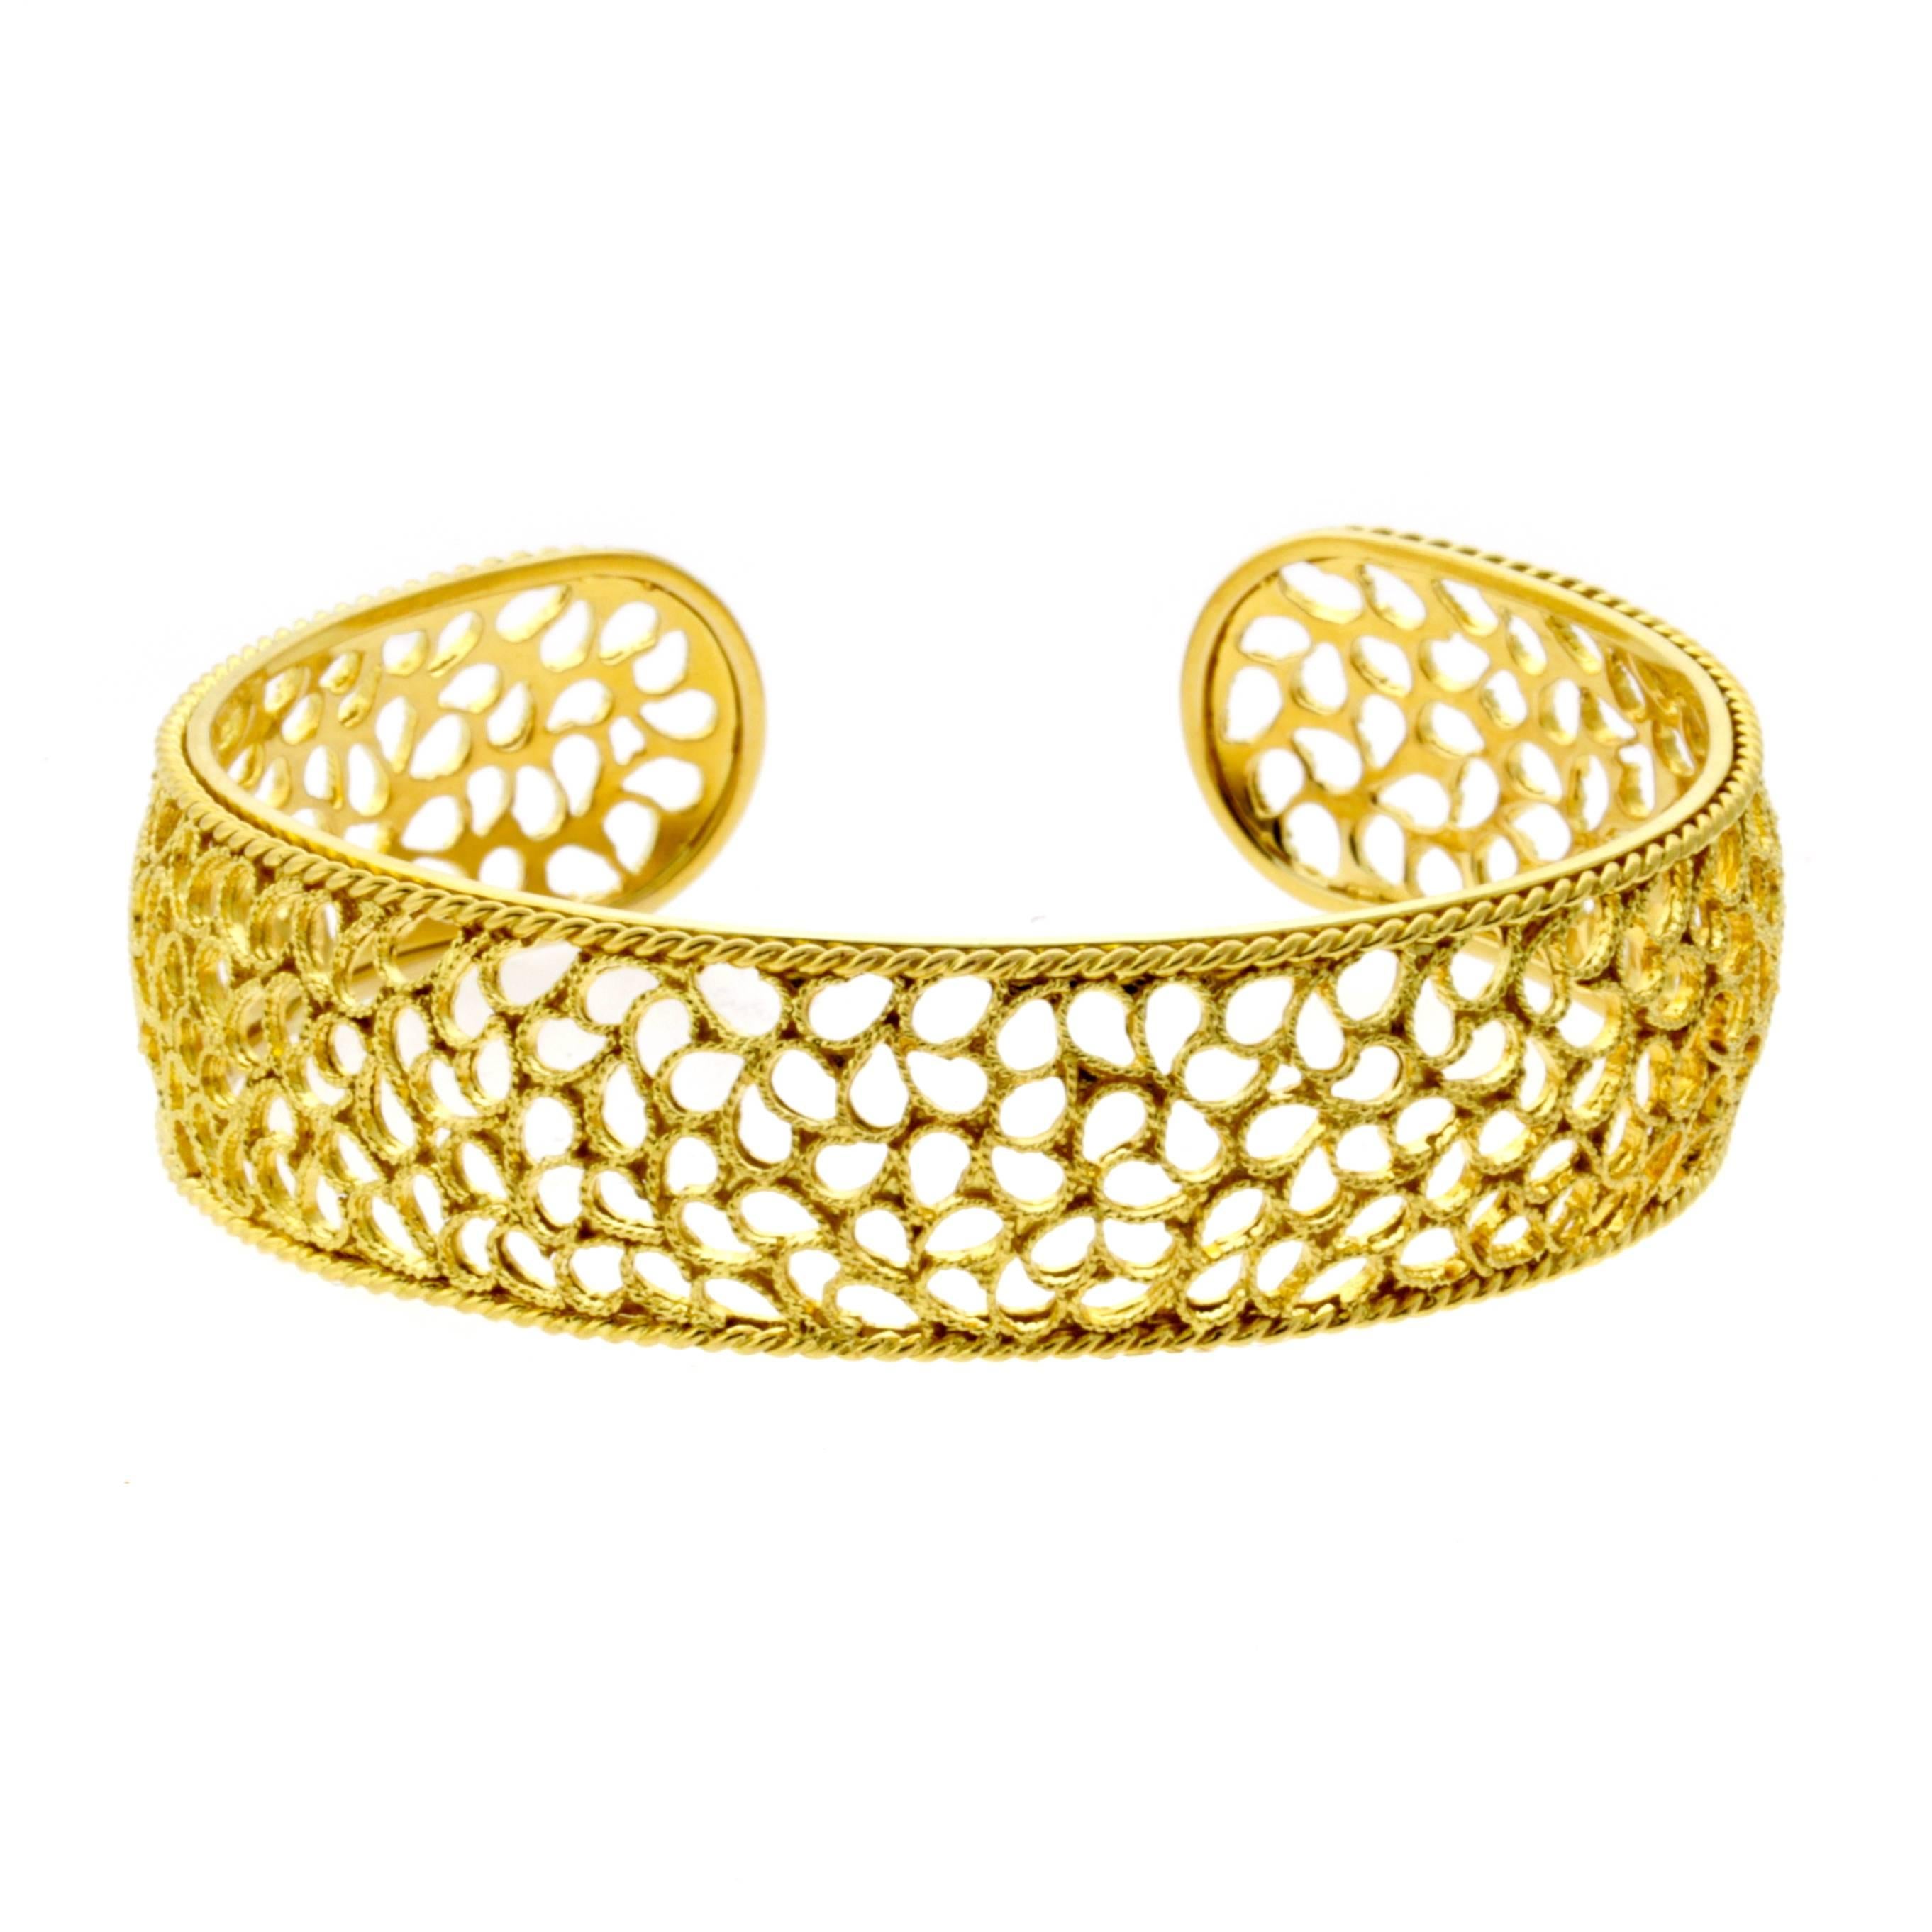 Buccellati Filidoro Gold Bangle Bracelet